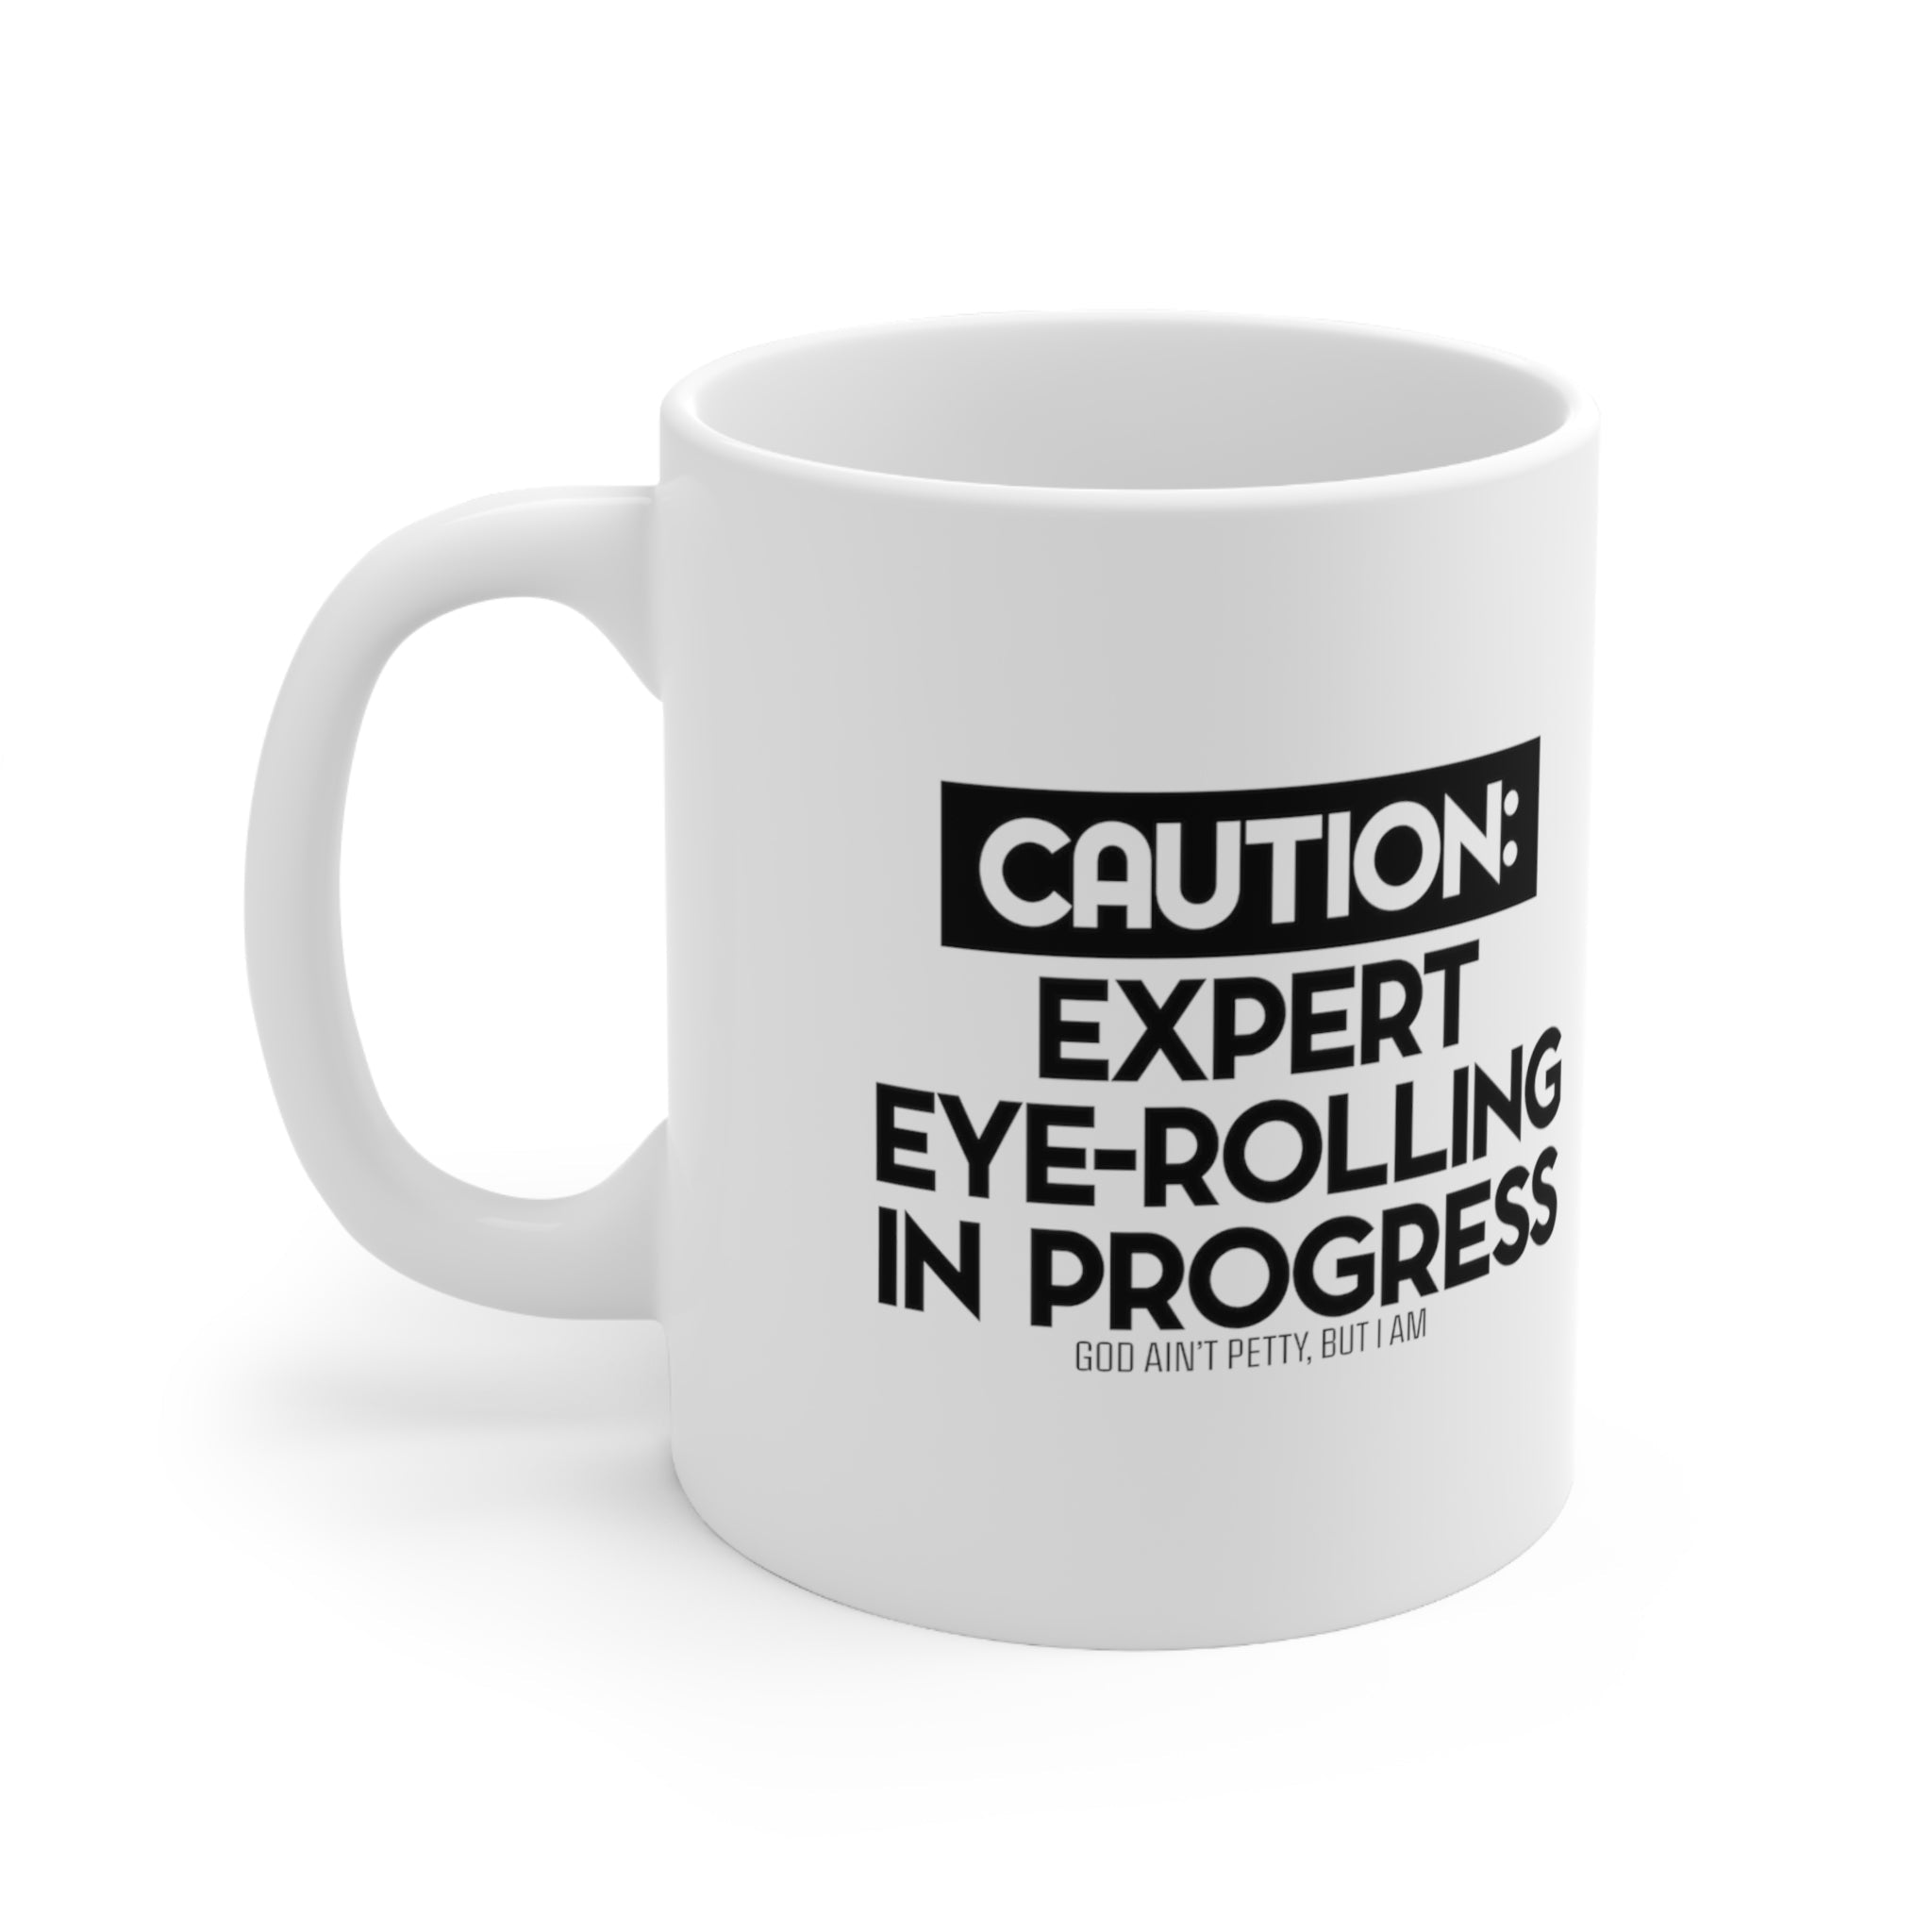 Caution Expert Eye-Rolling in Progress Mug 11oz (White/Black)-Mug-The Original God Ain't Petty But I Am